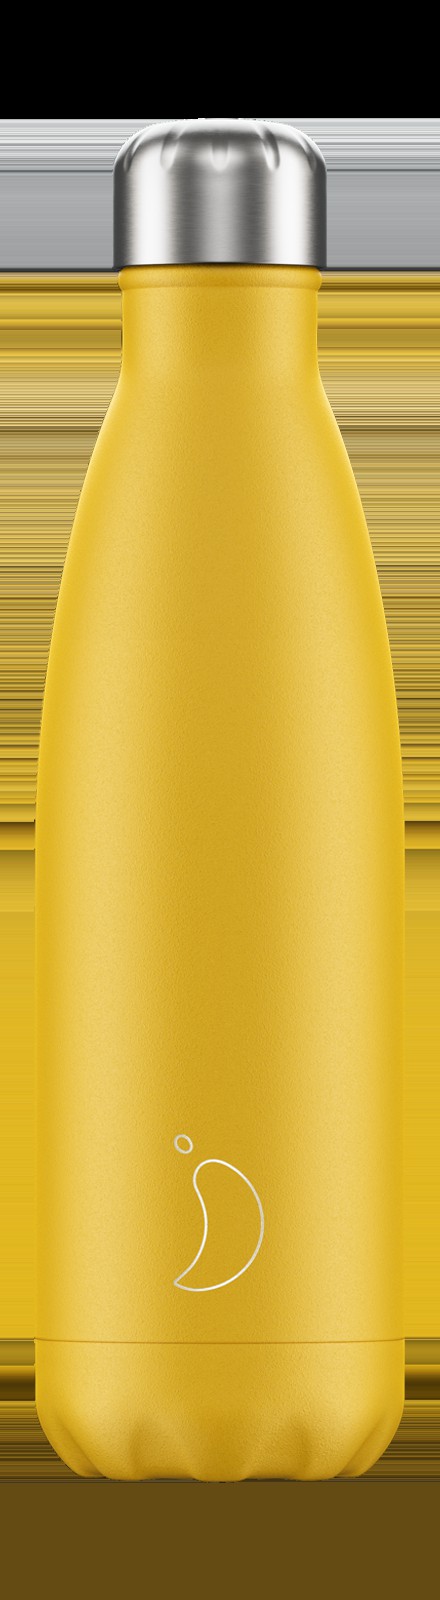 تشيليز قارورة غير لامعة، 500 مل - لون اصفر